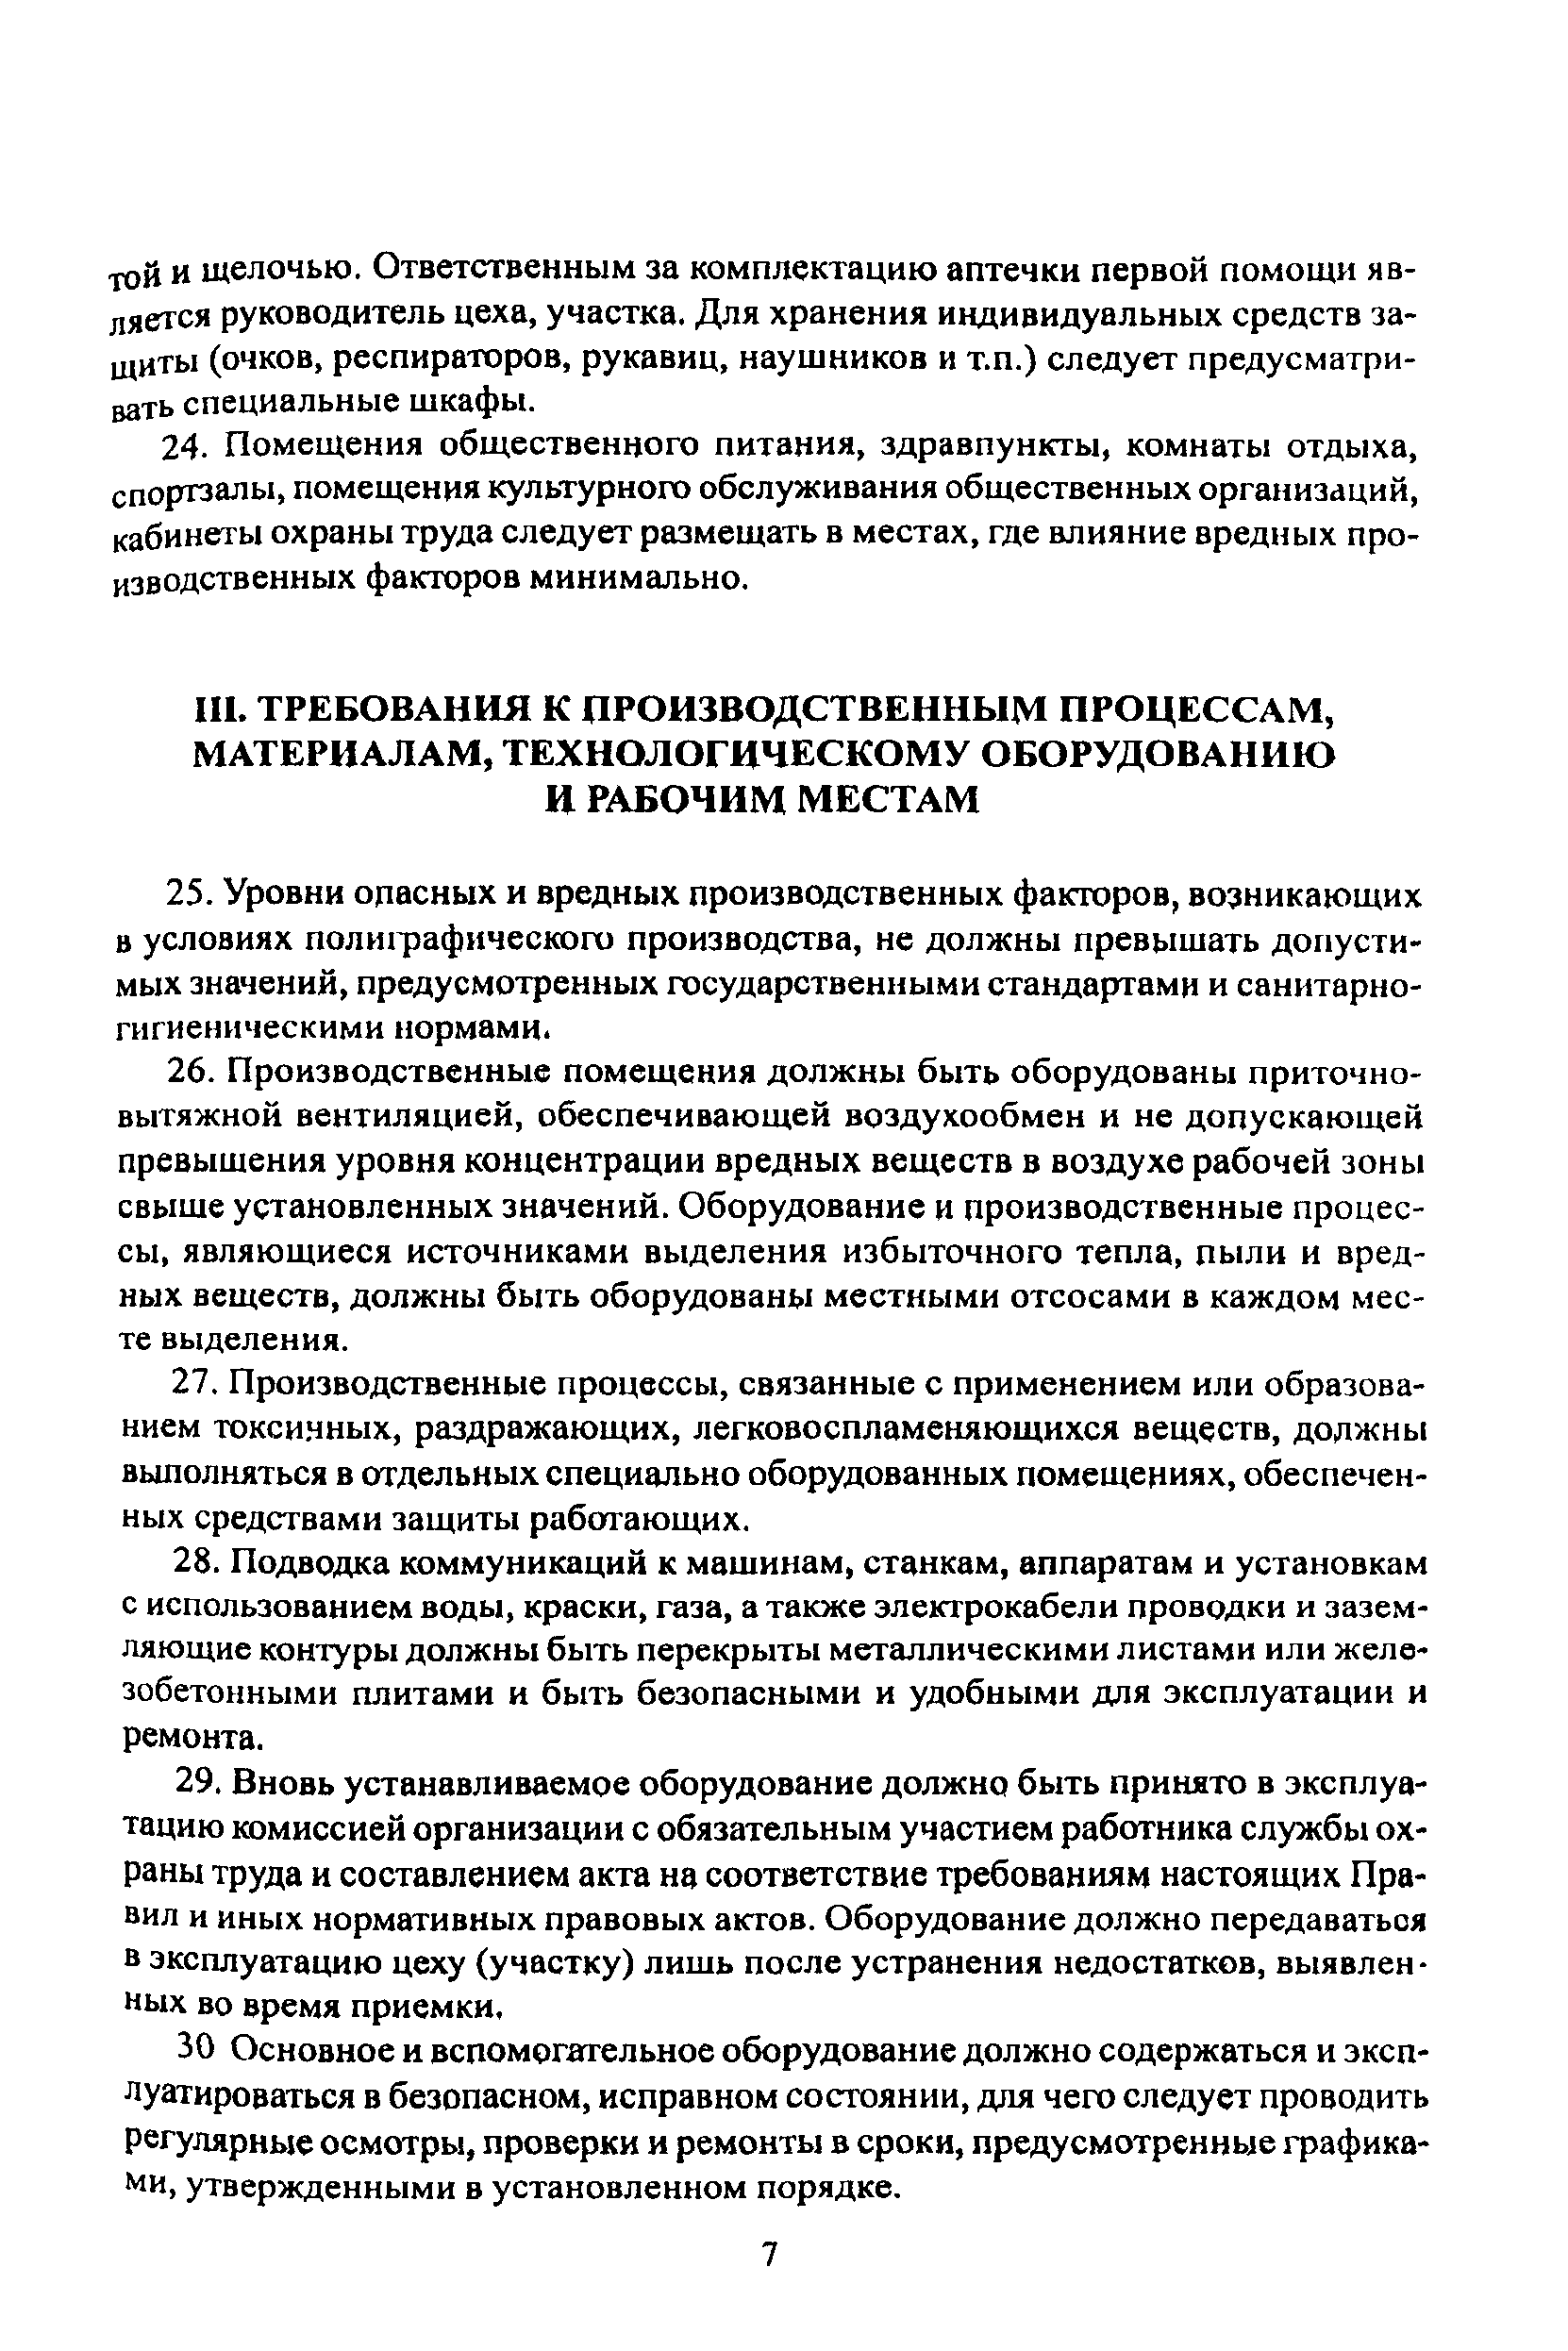 ПОТ Р О-001-2002